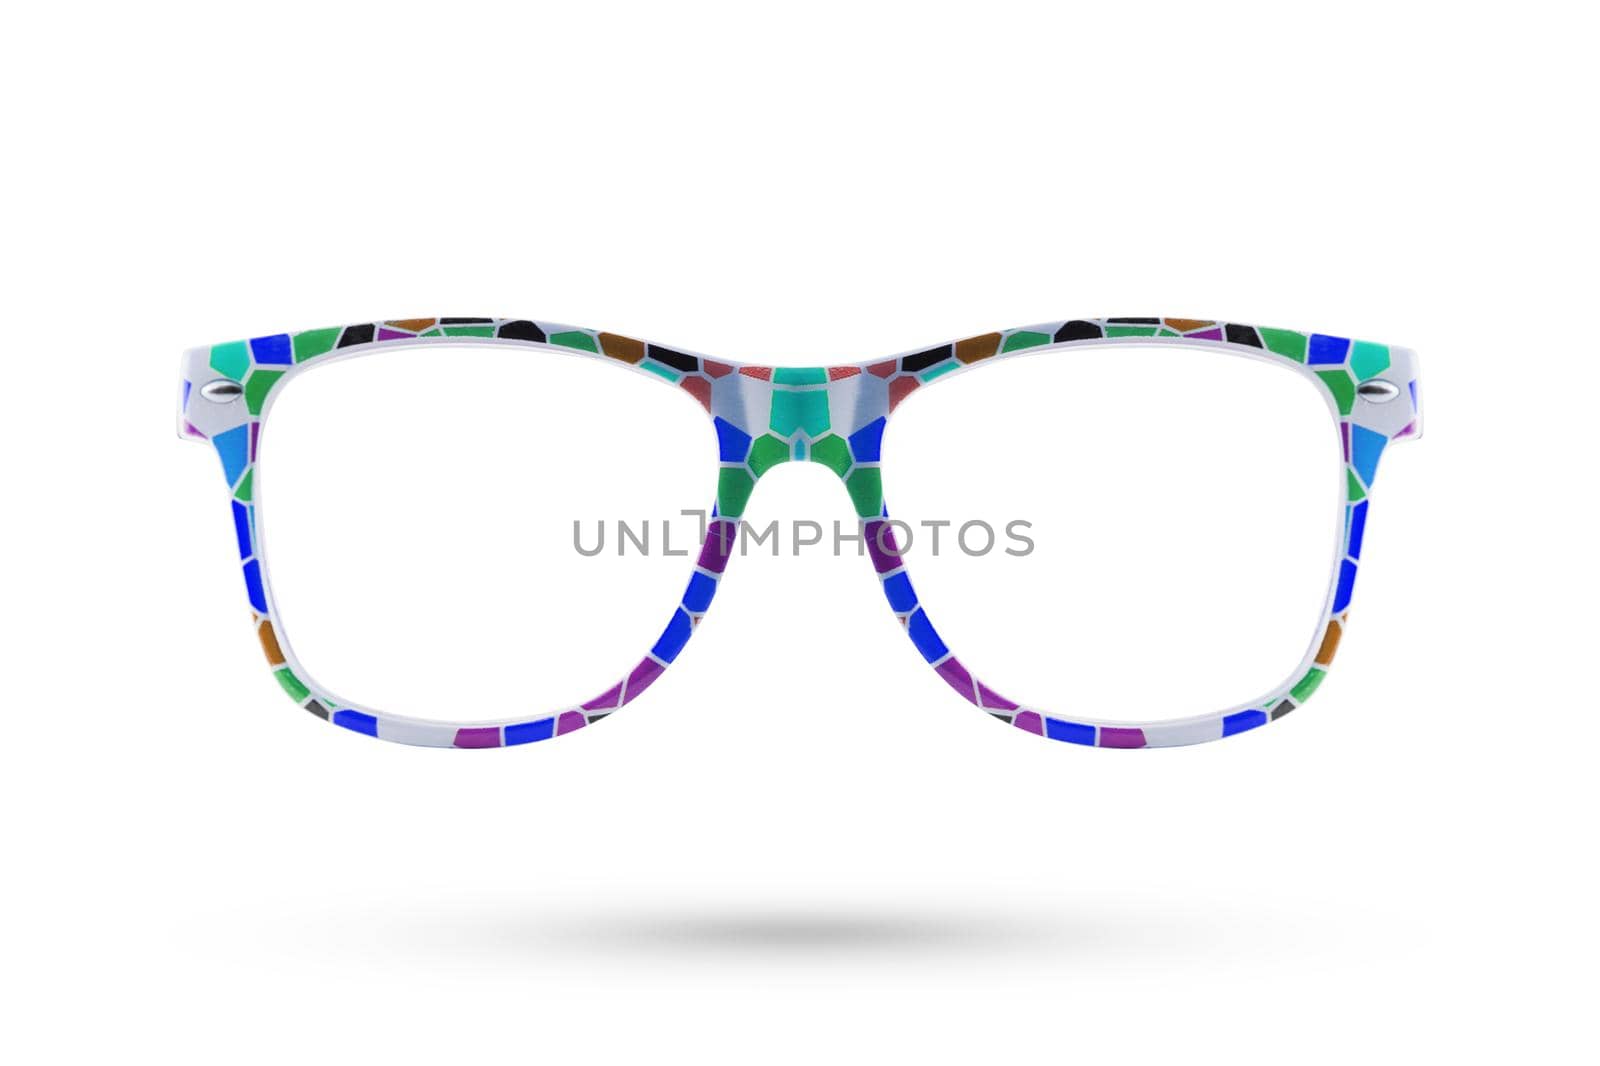 Fashion rainbow glasses style plastic-framed isolated on white background. by jayzynism